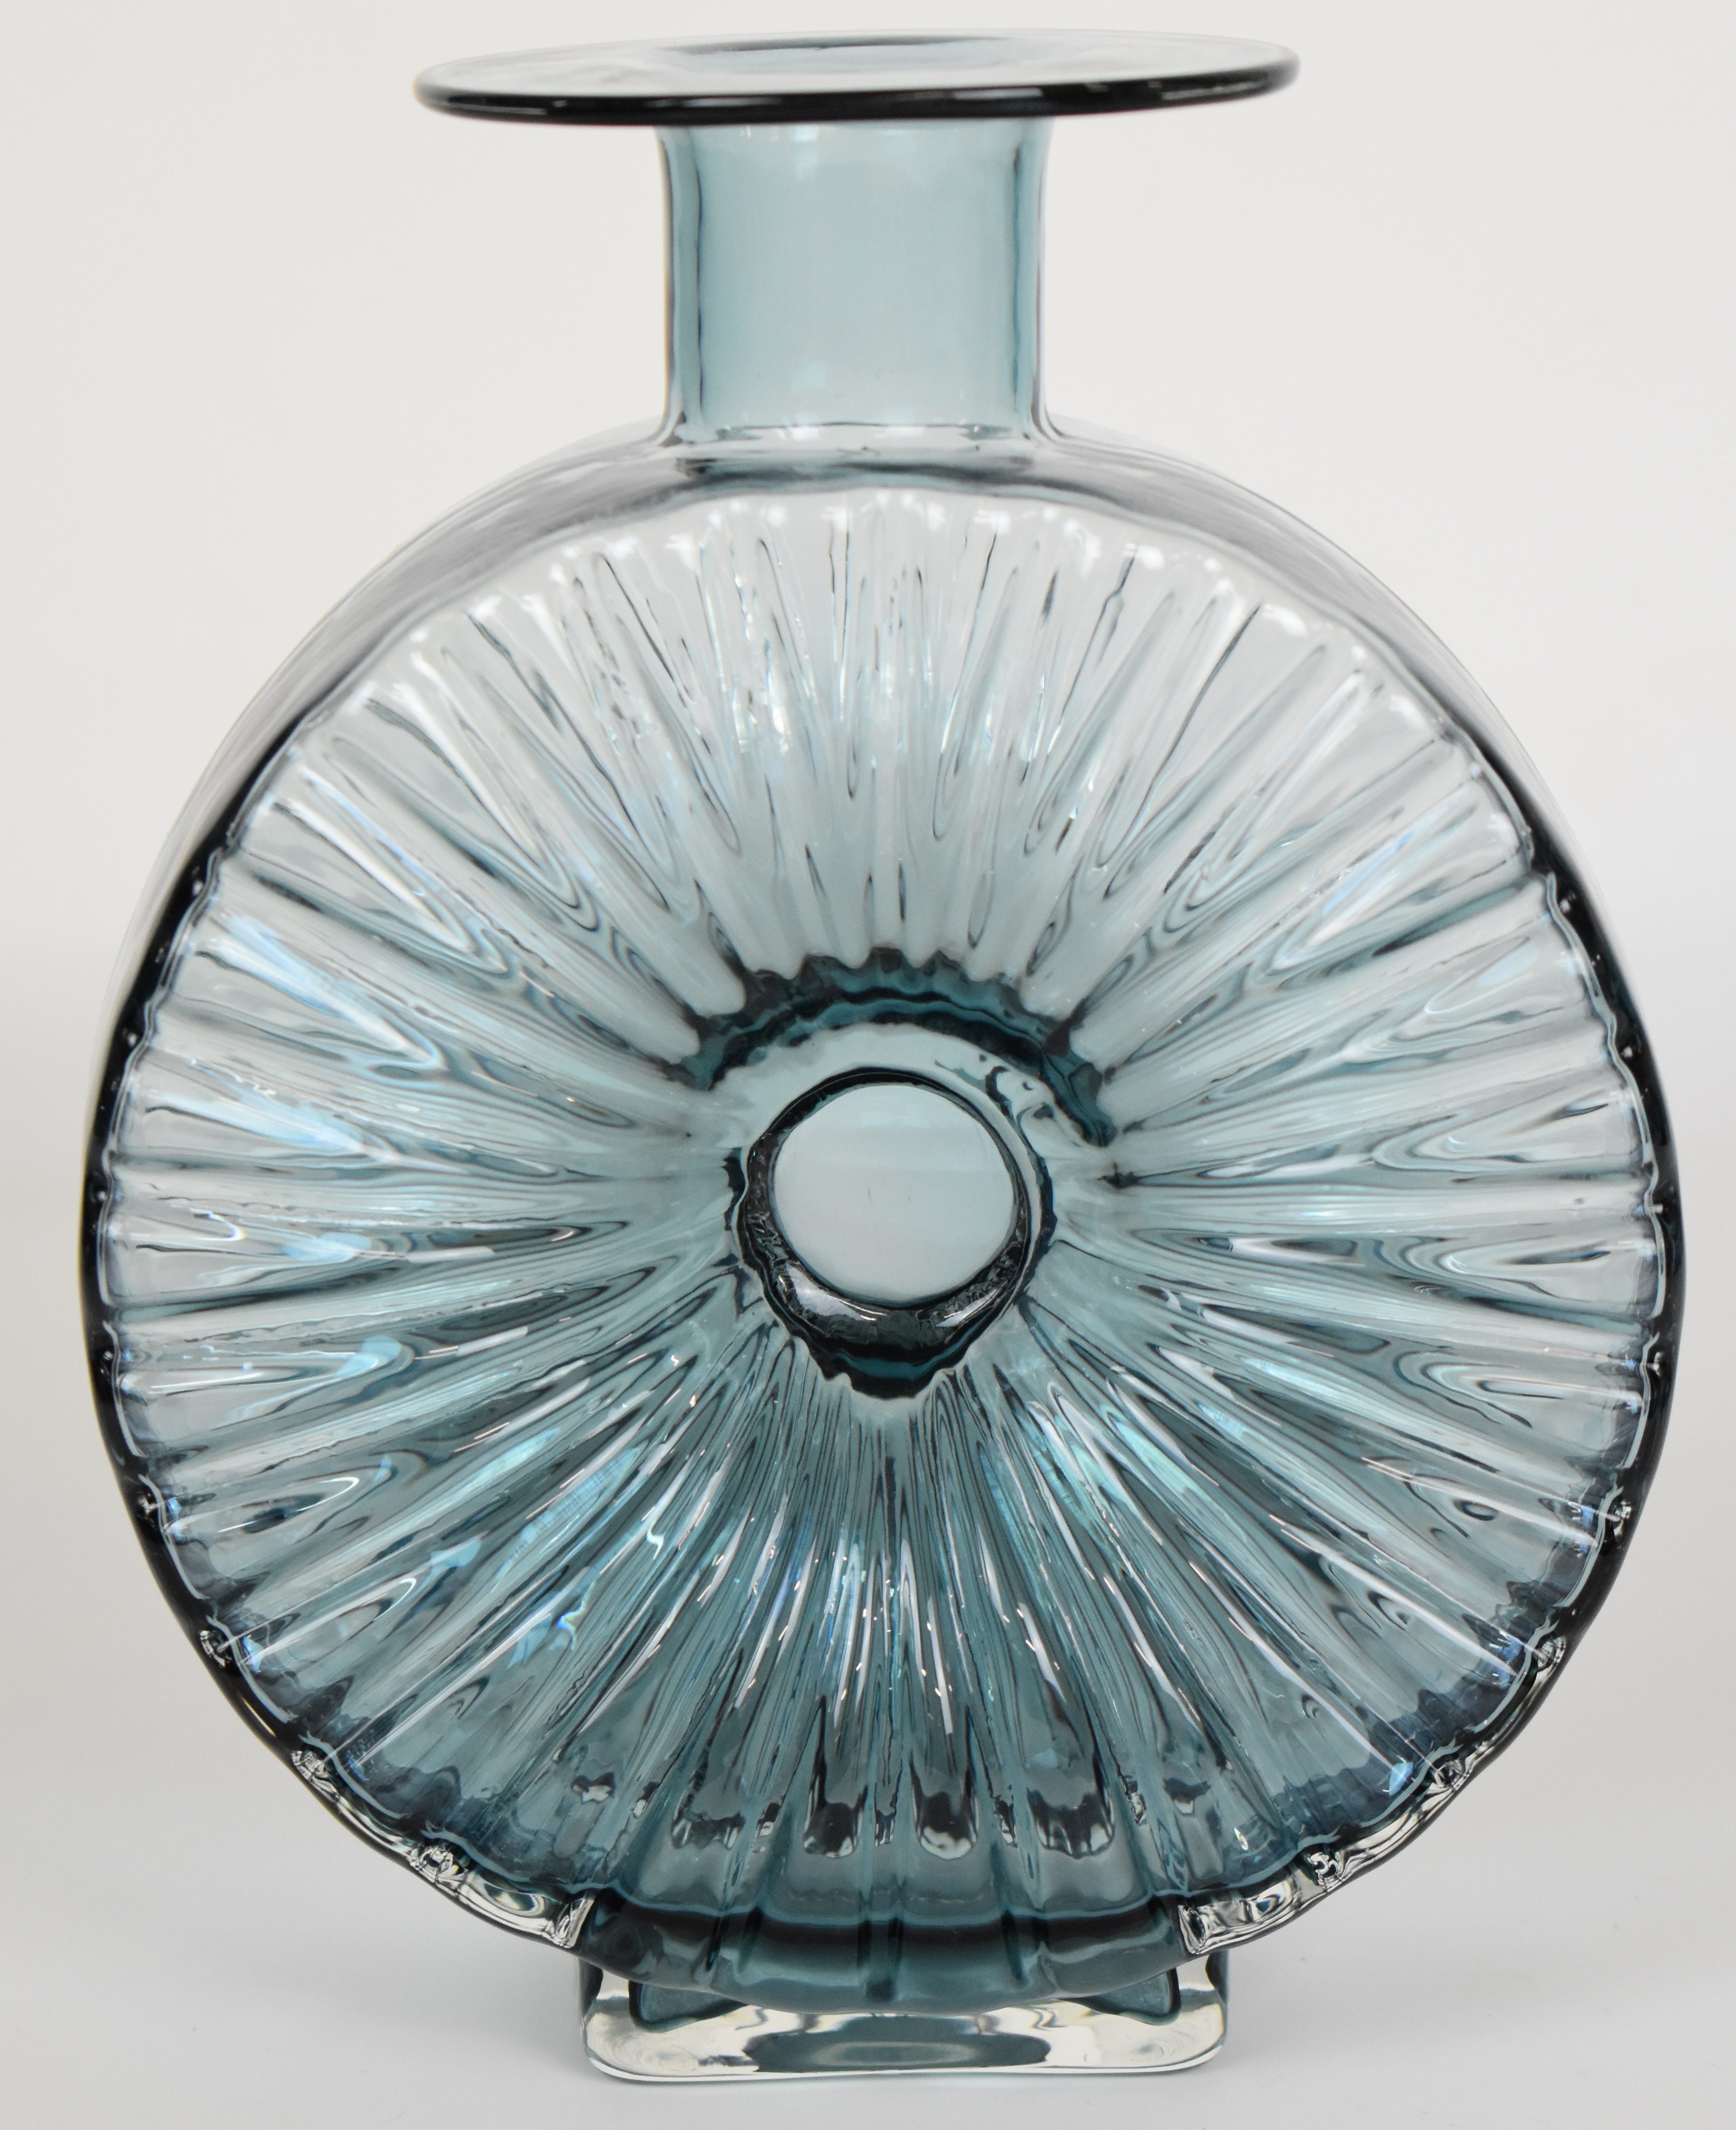 Helena Tynell for Riihimaen Lasi Riihimaki Aurinkopullo Sun Bottle glass vase in indigo blue, 22.5cm - Image 3 of 4